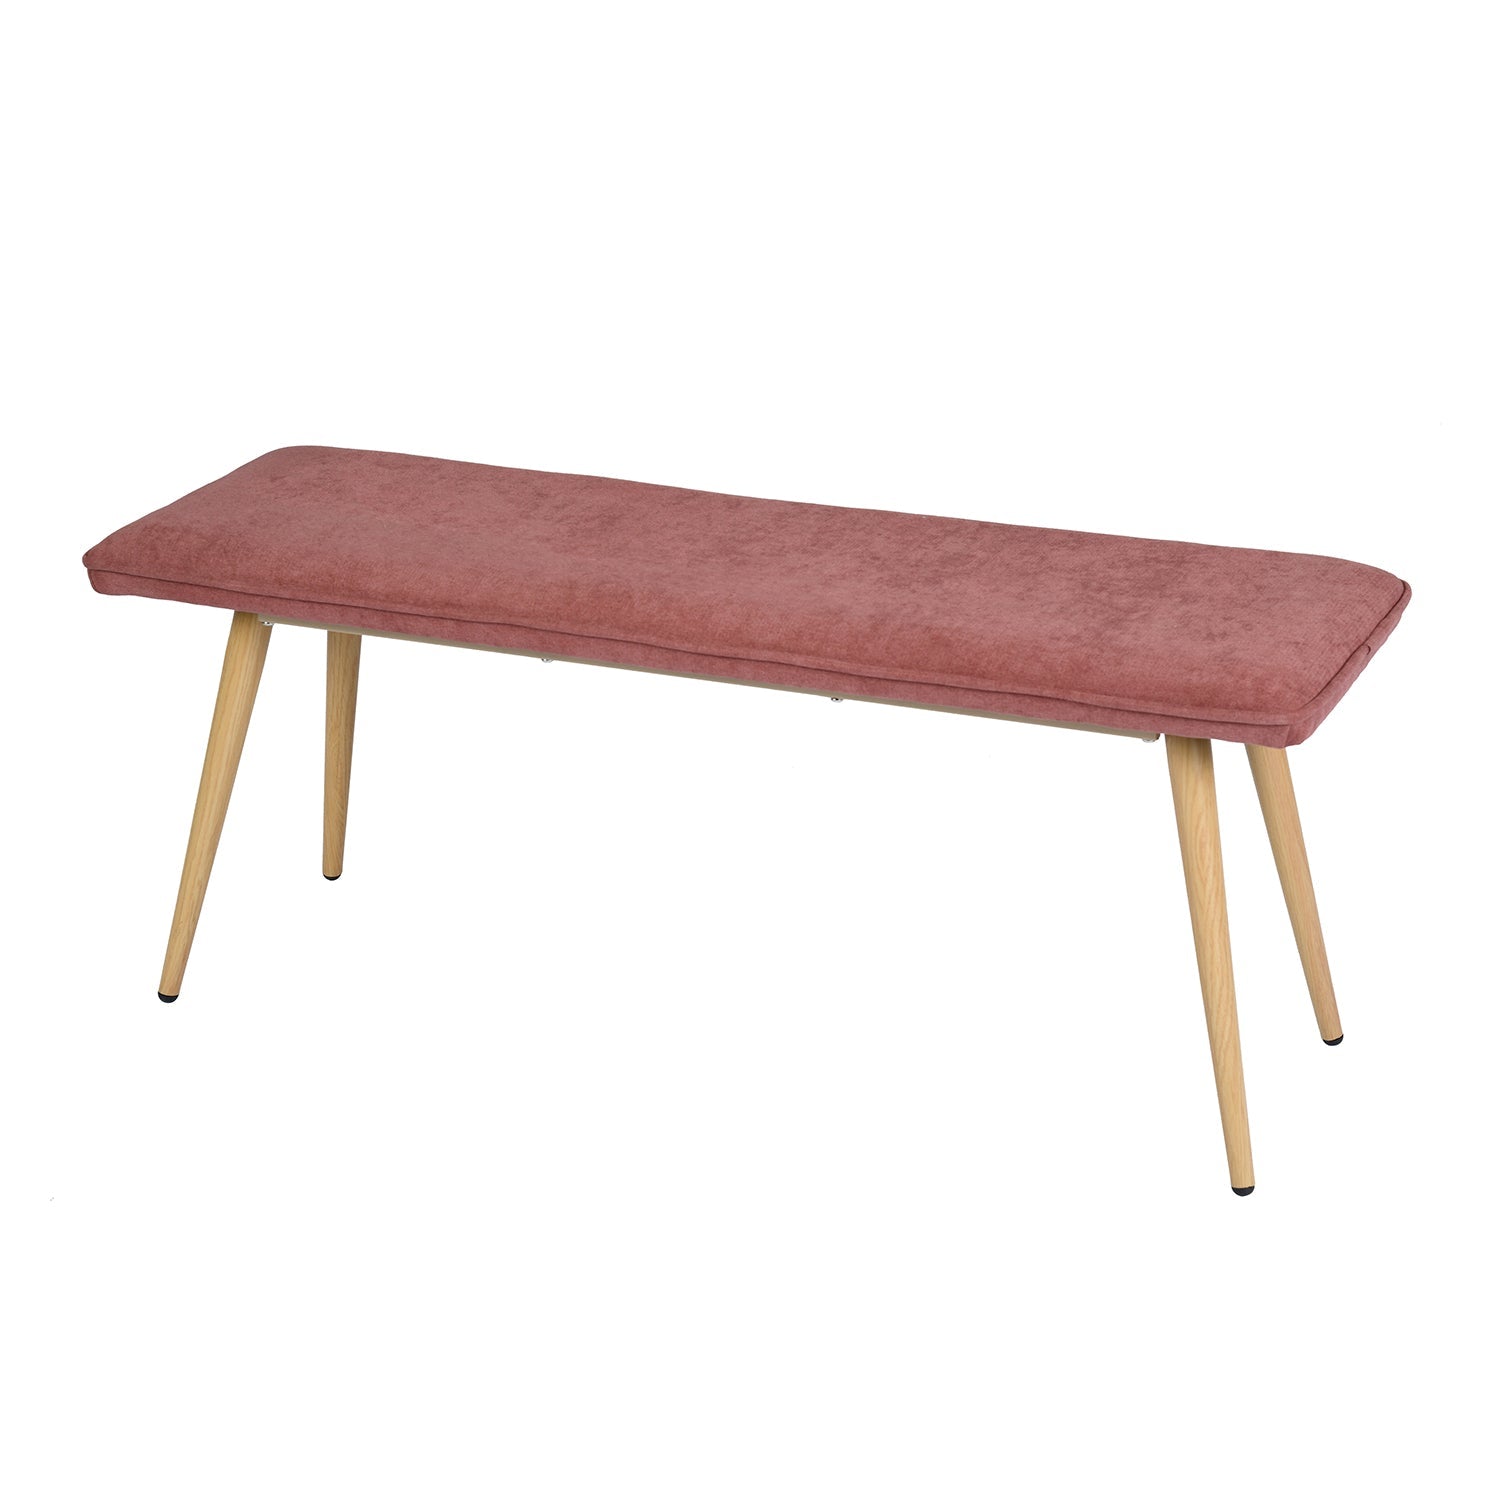 Nuhu Upholstery Bench